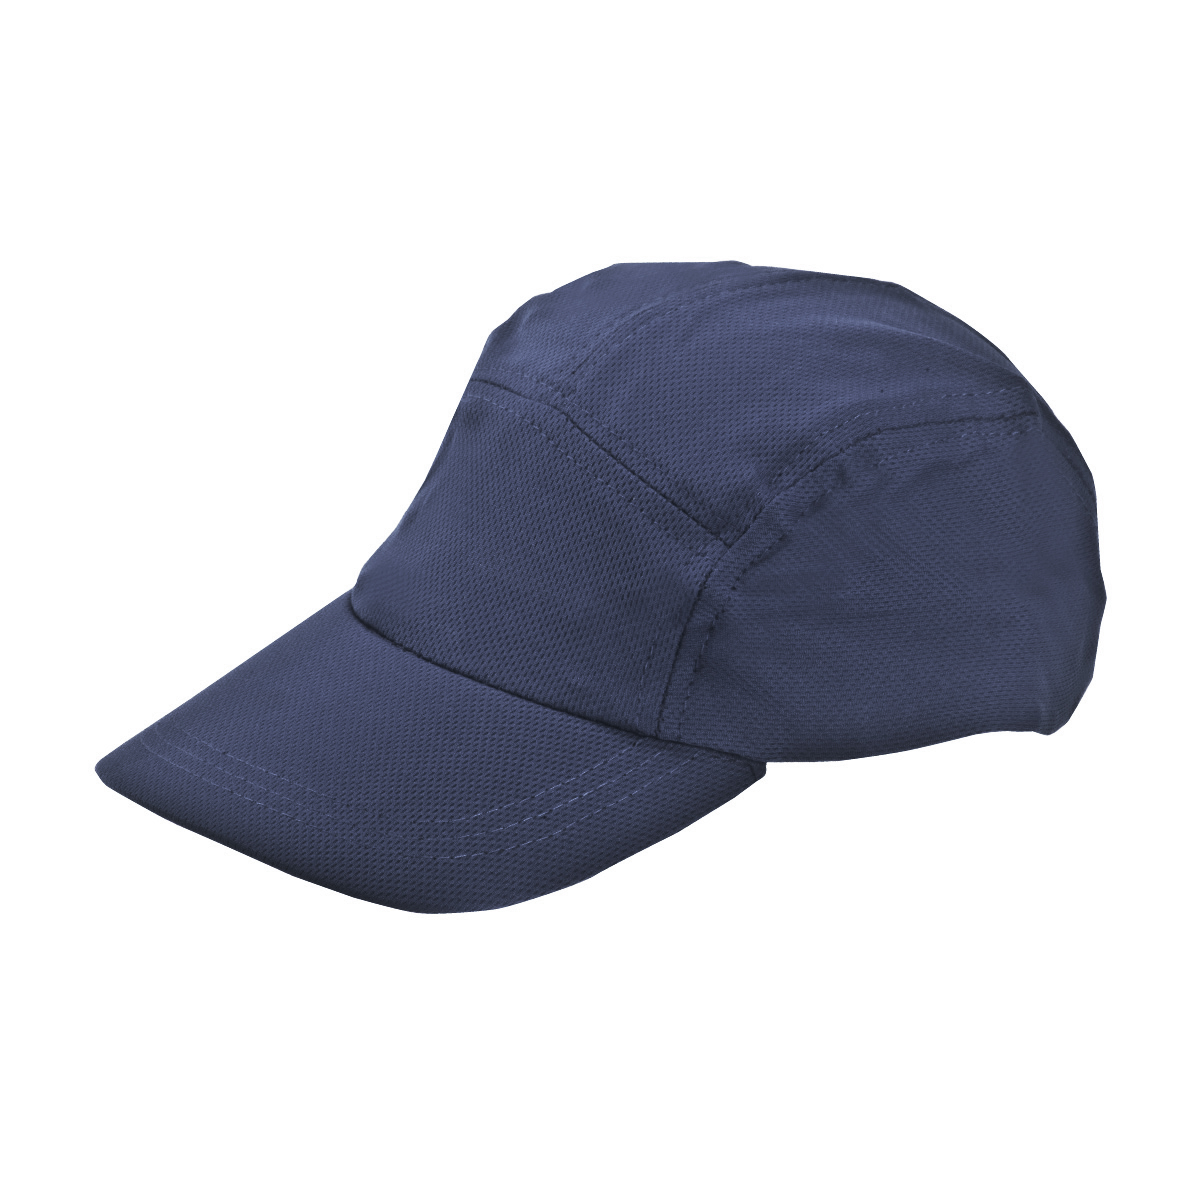 כובע Dry-Fit איכותי